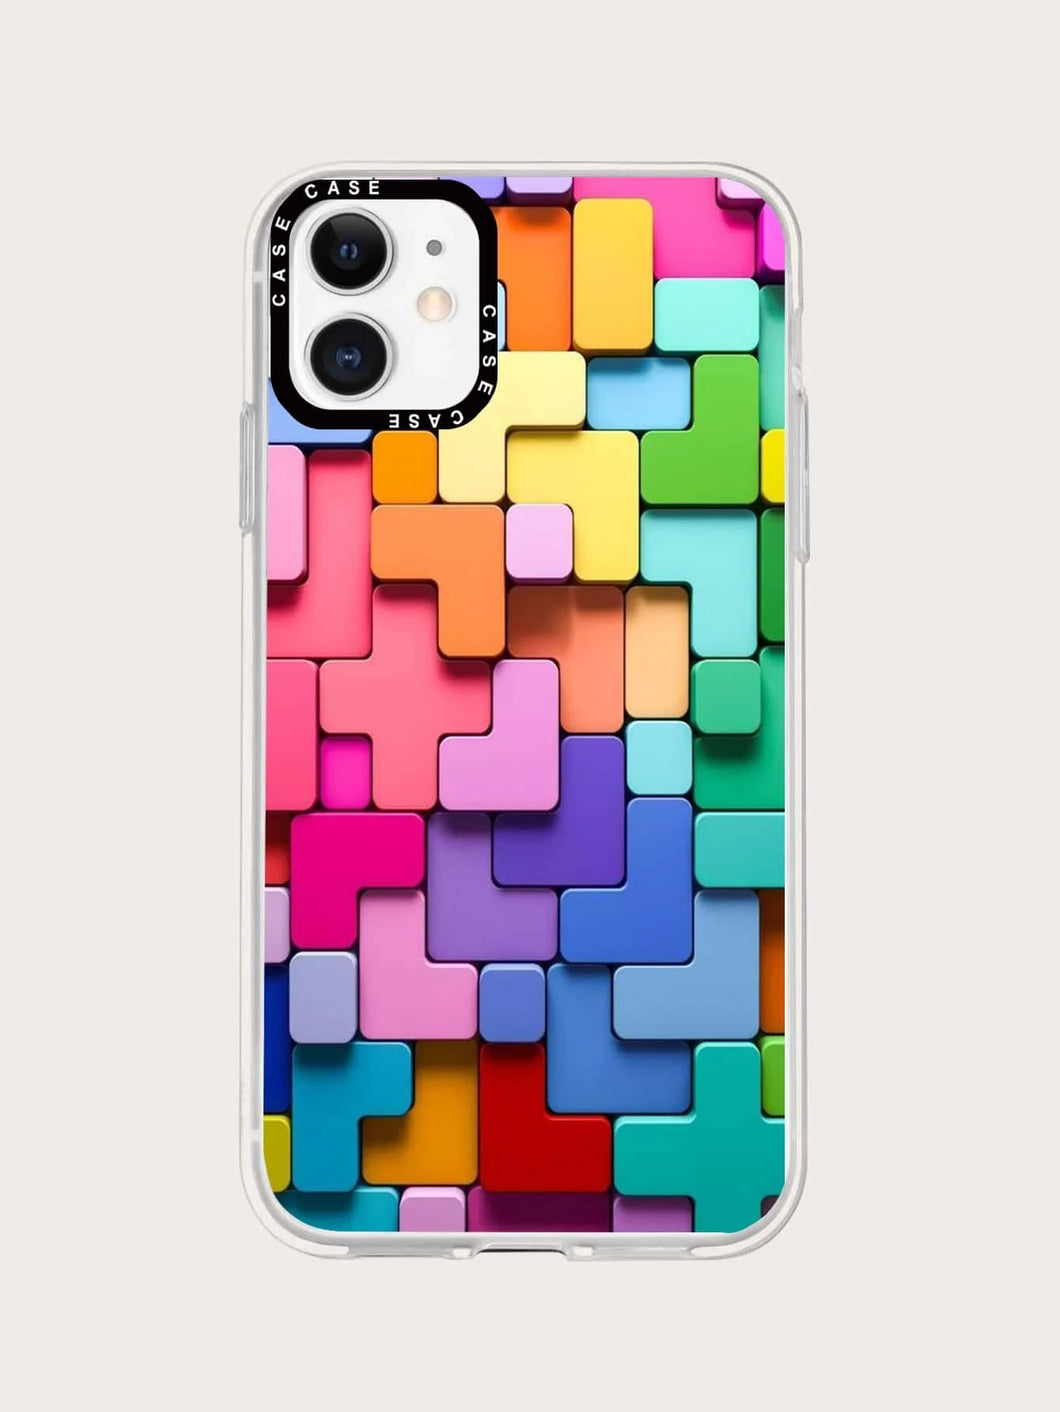 Cover iPhone estilo caja de colores disponible desde iPhone 7  hasta iPhone 13 Pro Max✅️